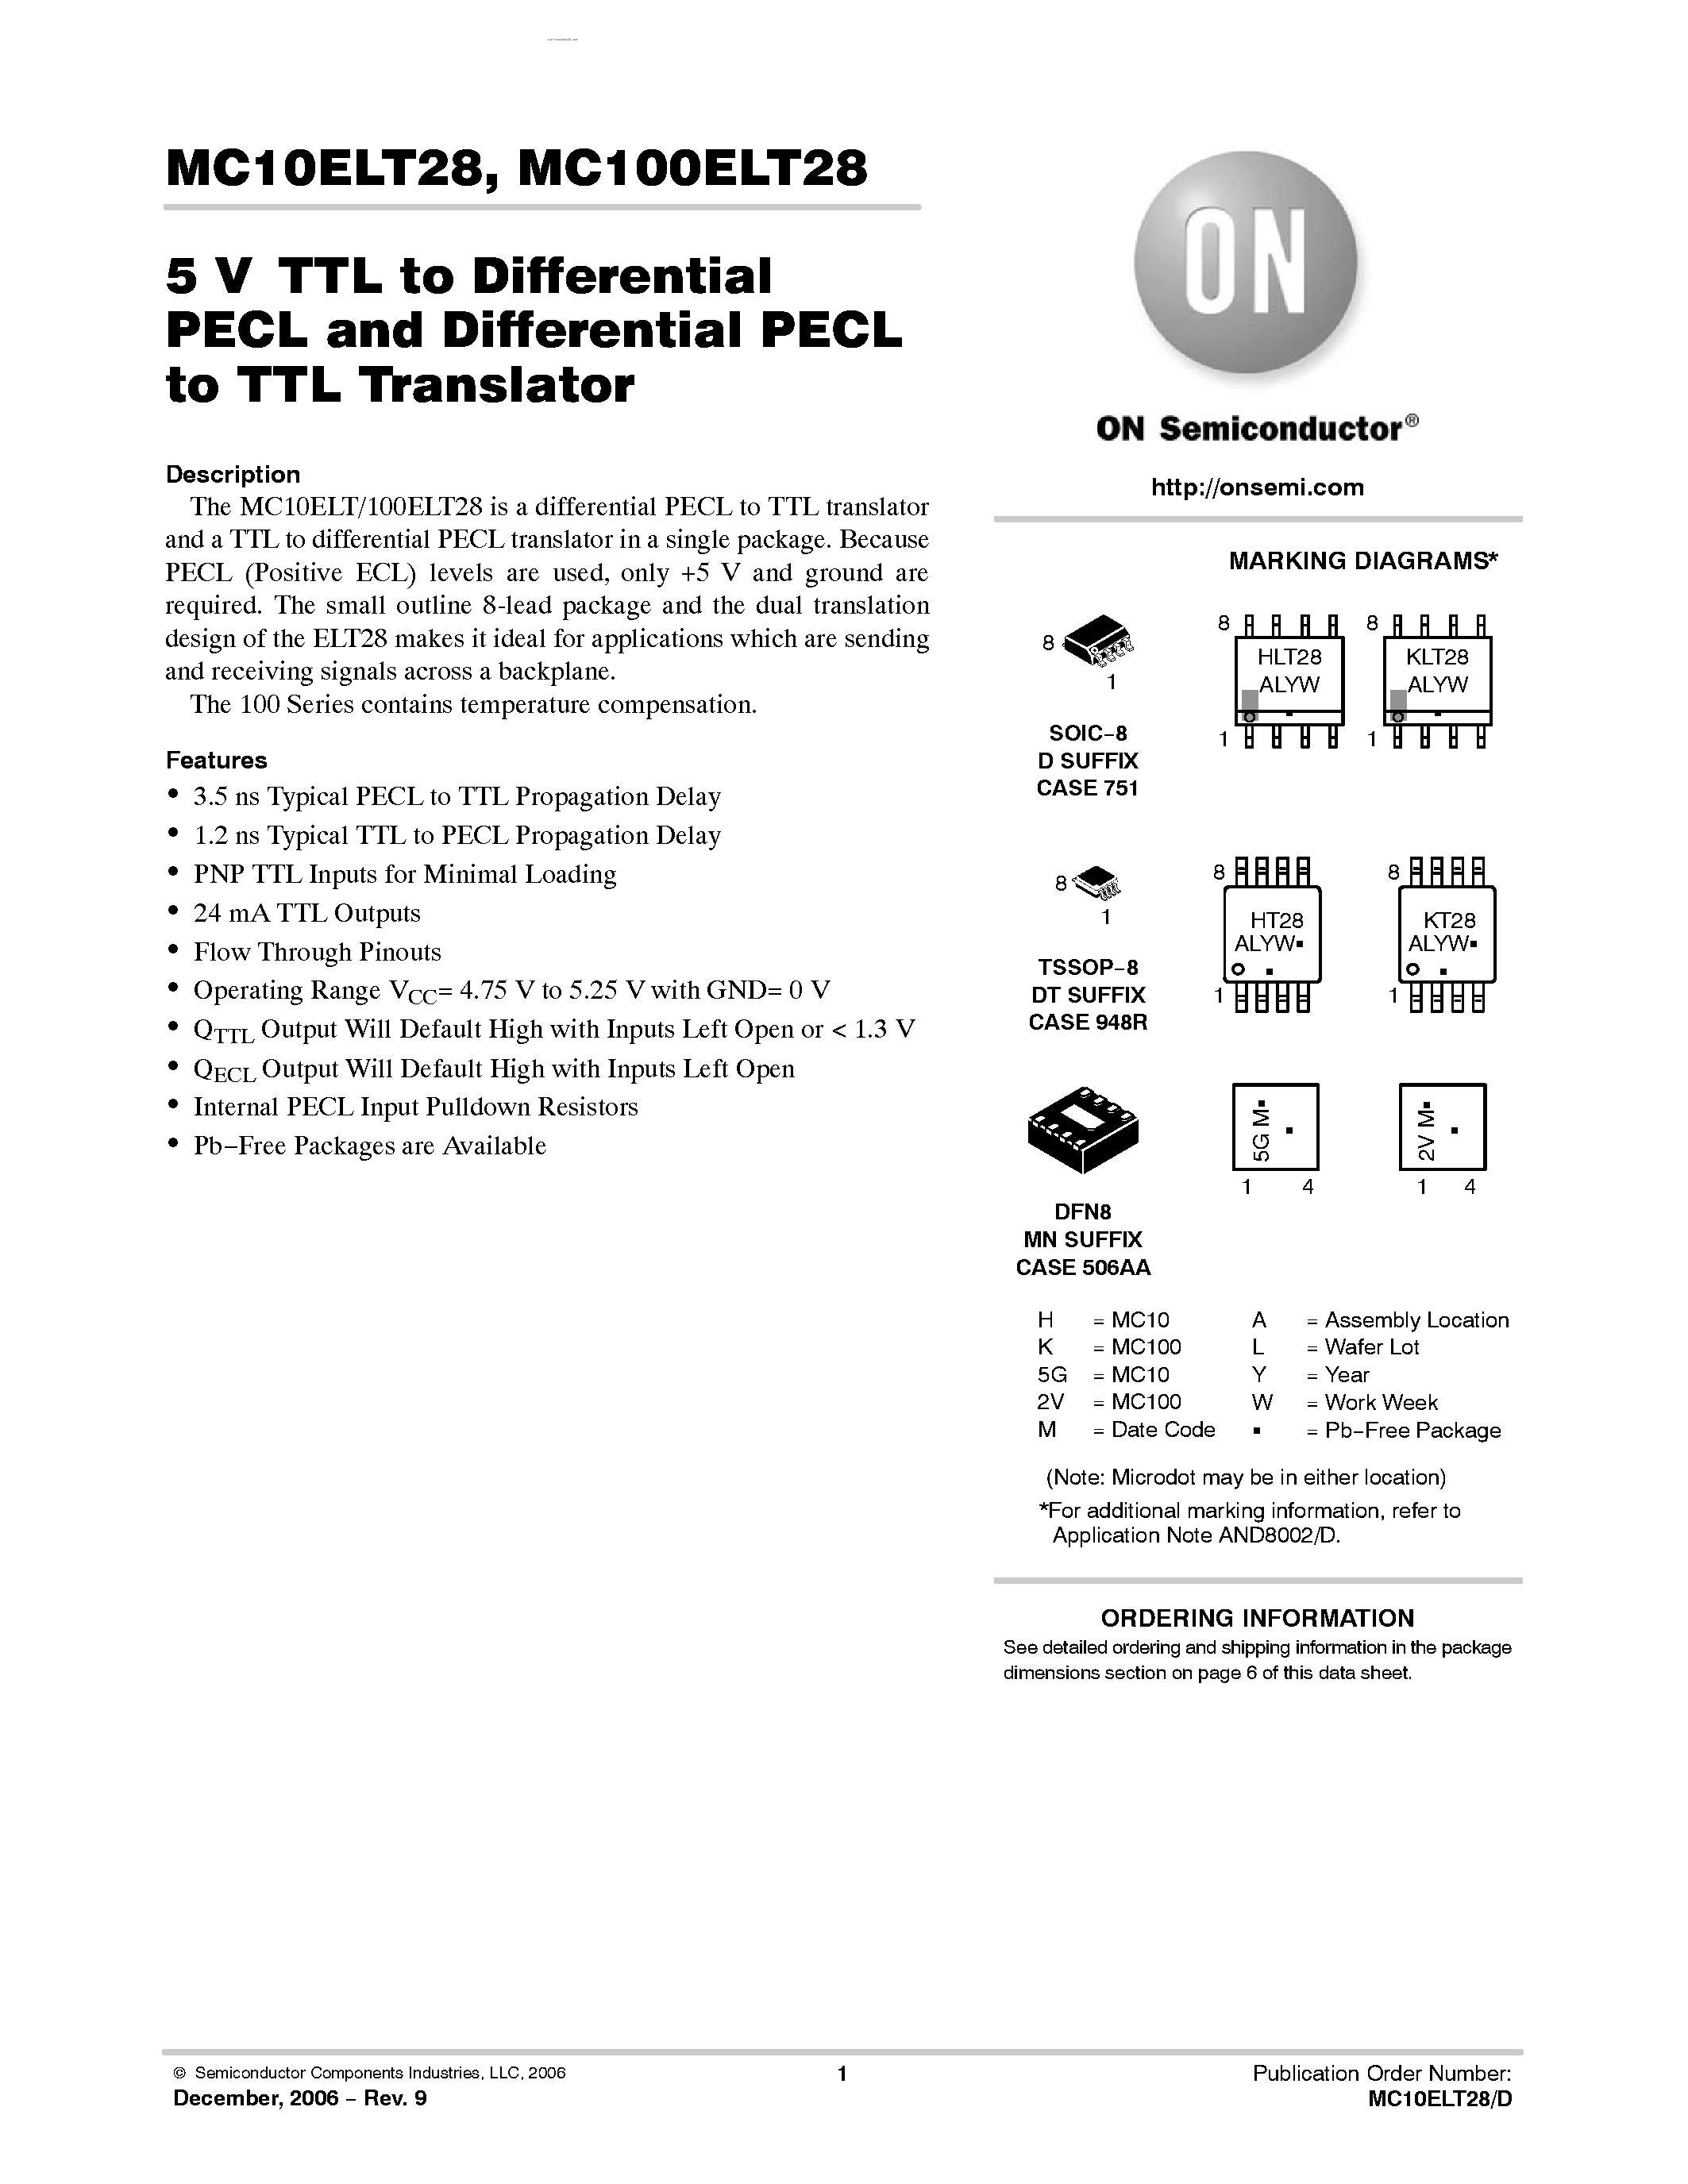 Даташит MC10ELT28-TTL to Differential PECL/Differential PECL to TTL Translator страница 1